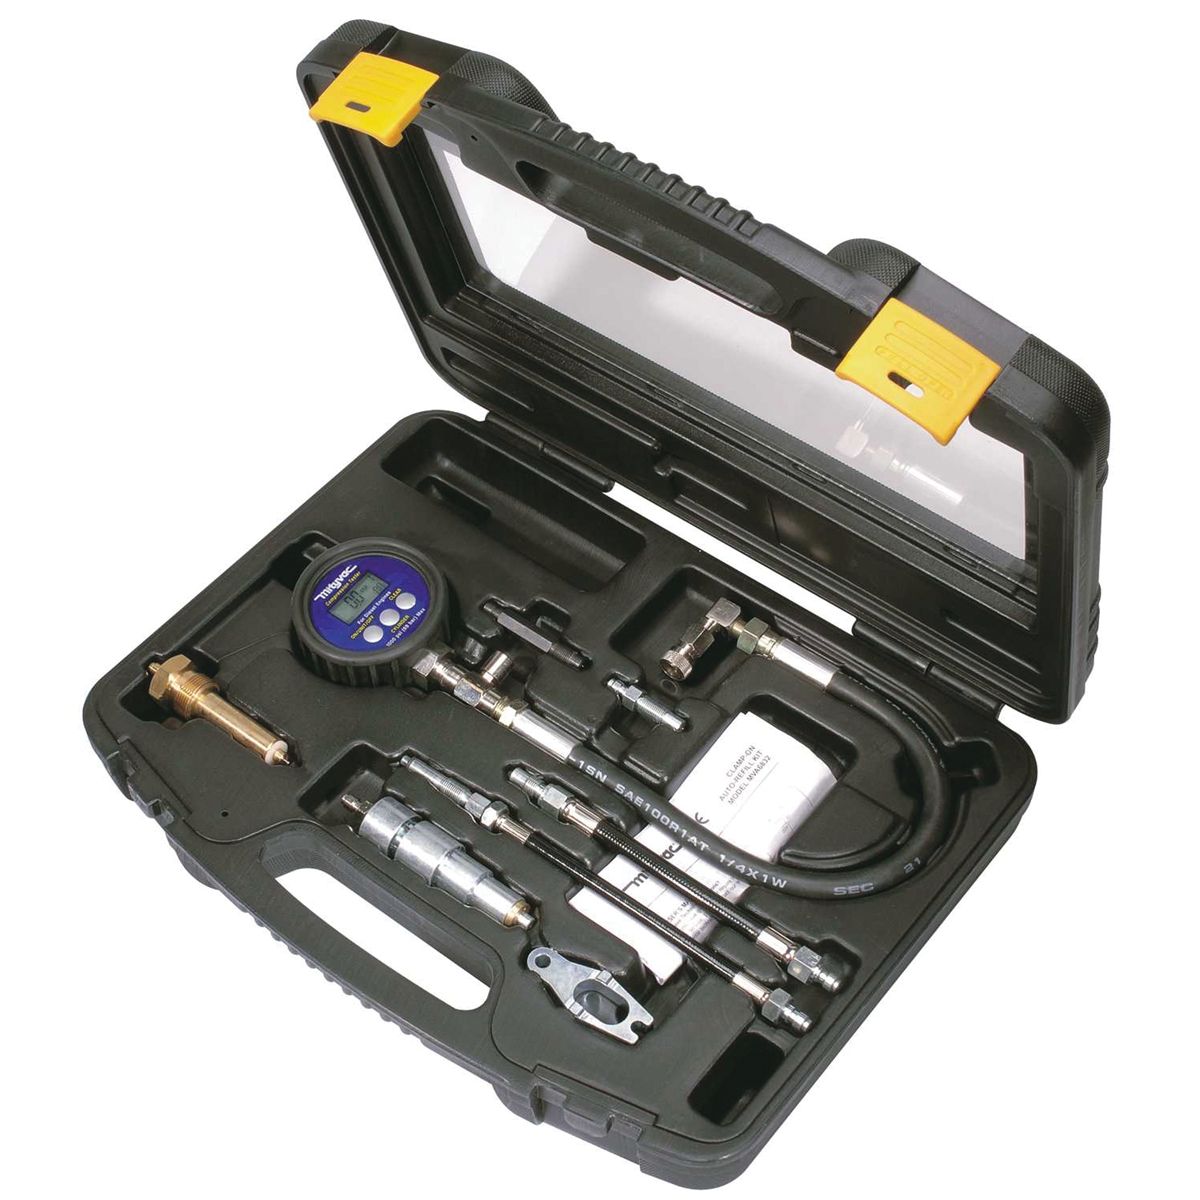 compression tester adapter kit